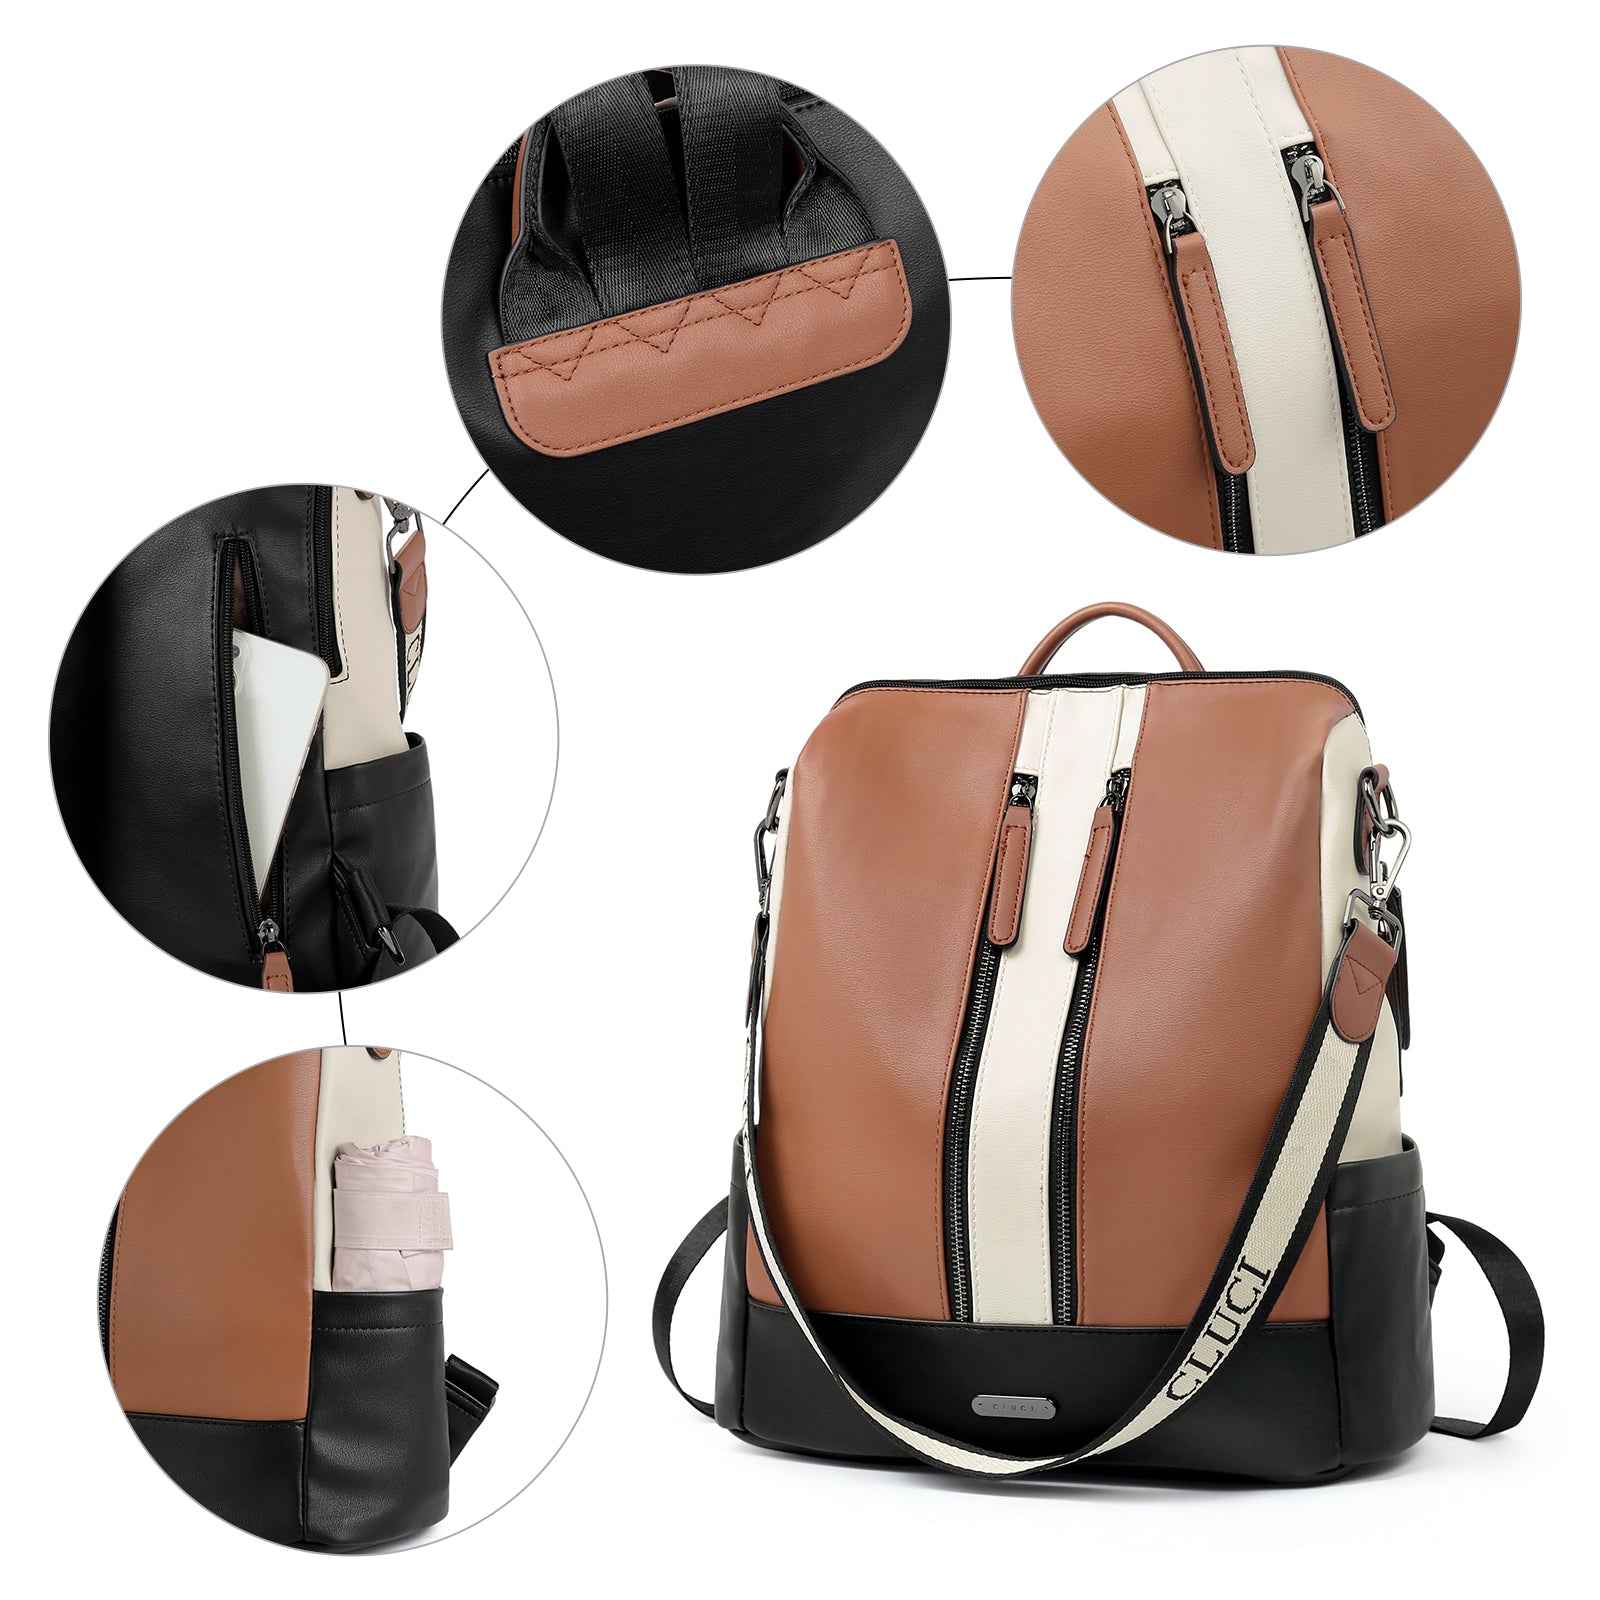 Travel Casual Leather Shoulder Bag and Backpack, Black